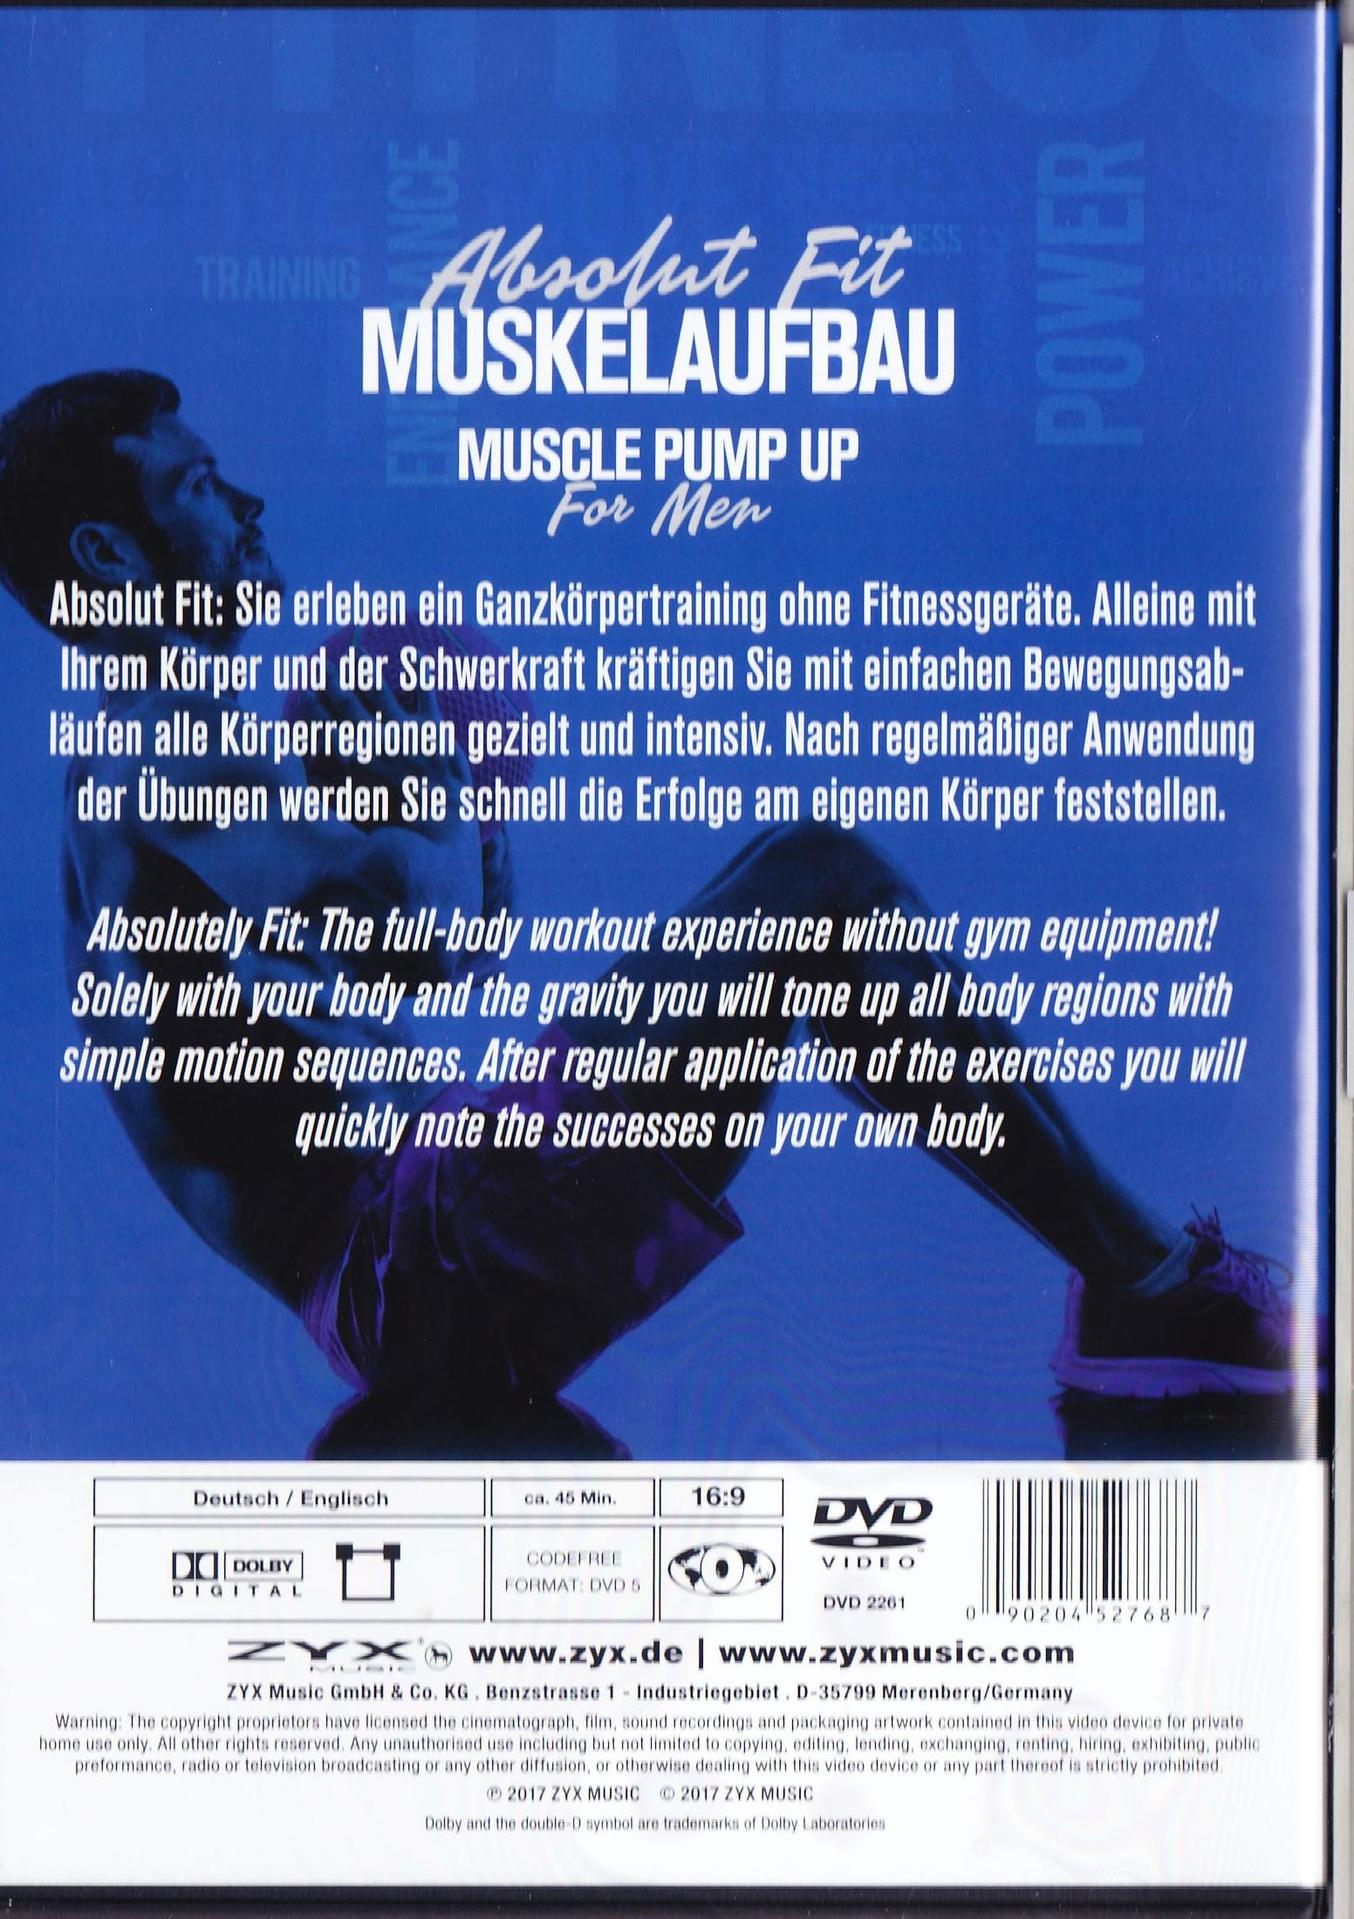 Absolut Fit: DVD Muskelaufbau